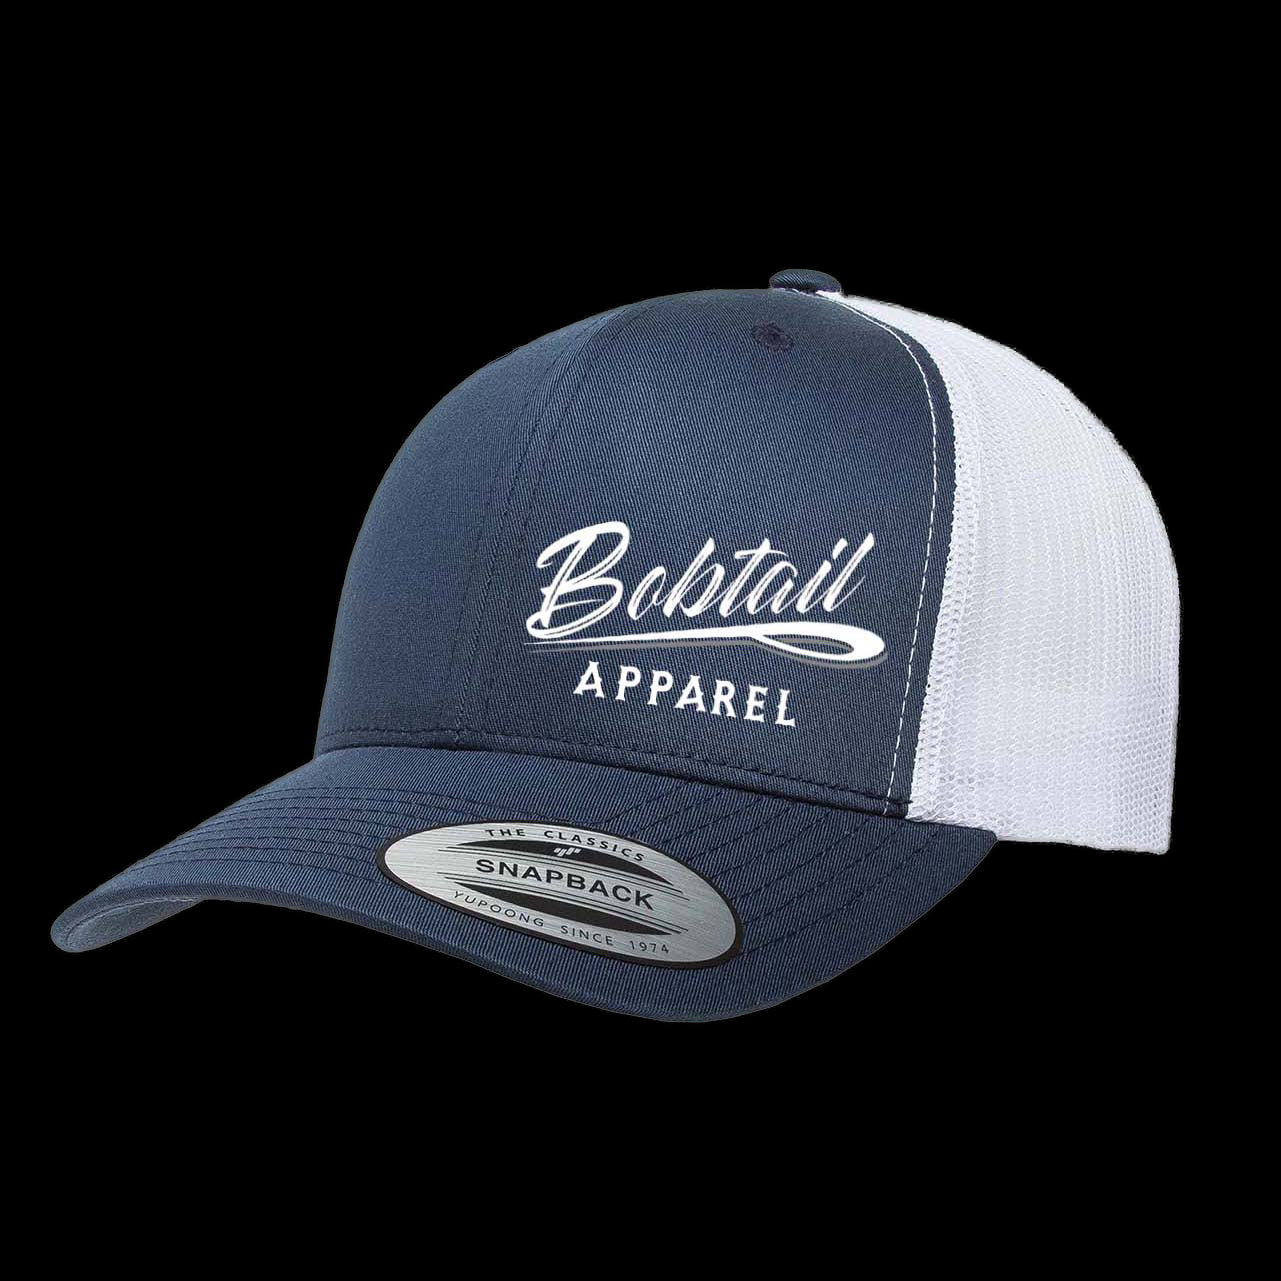 Bobtail Logo Curved Bill